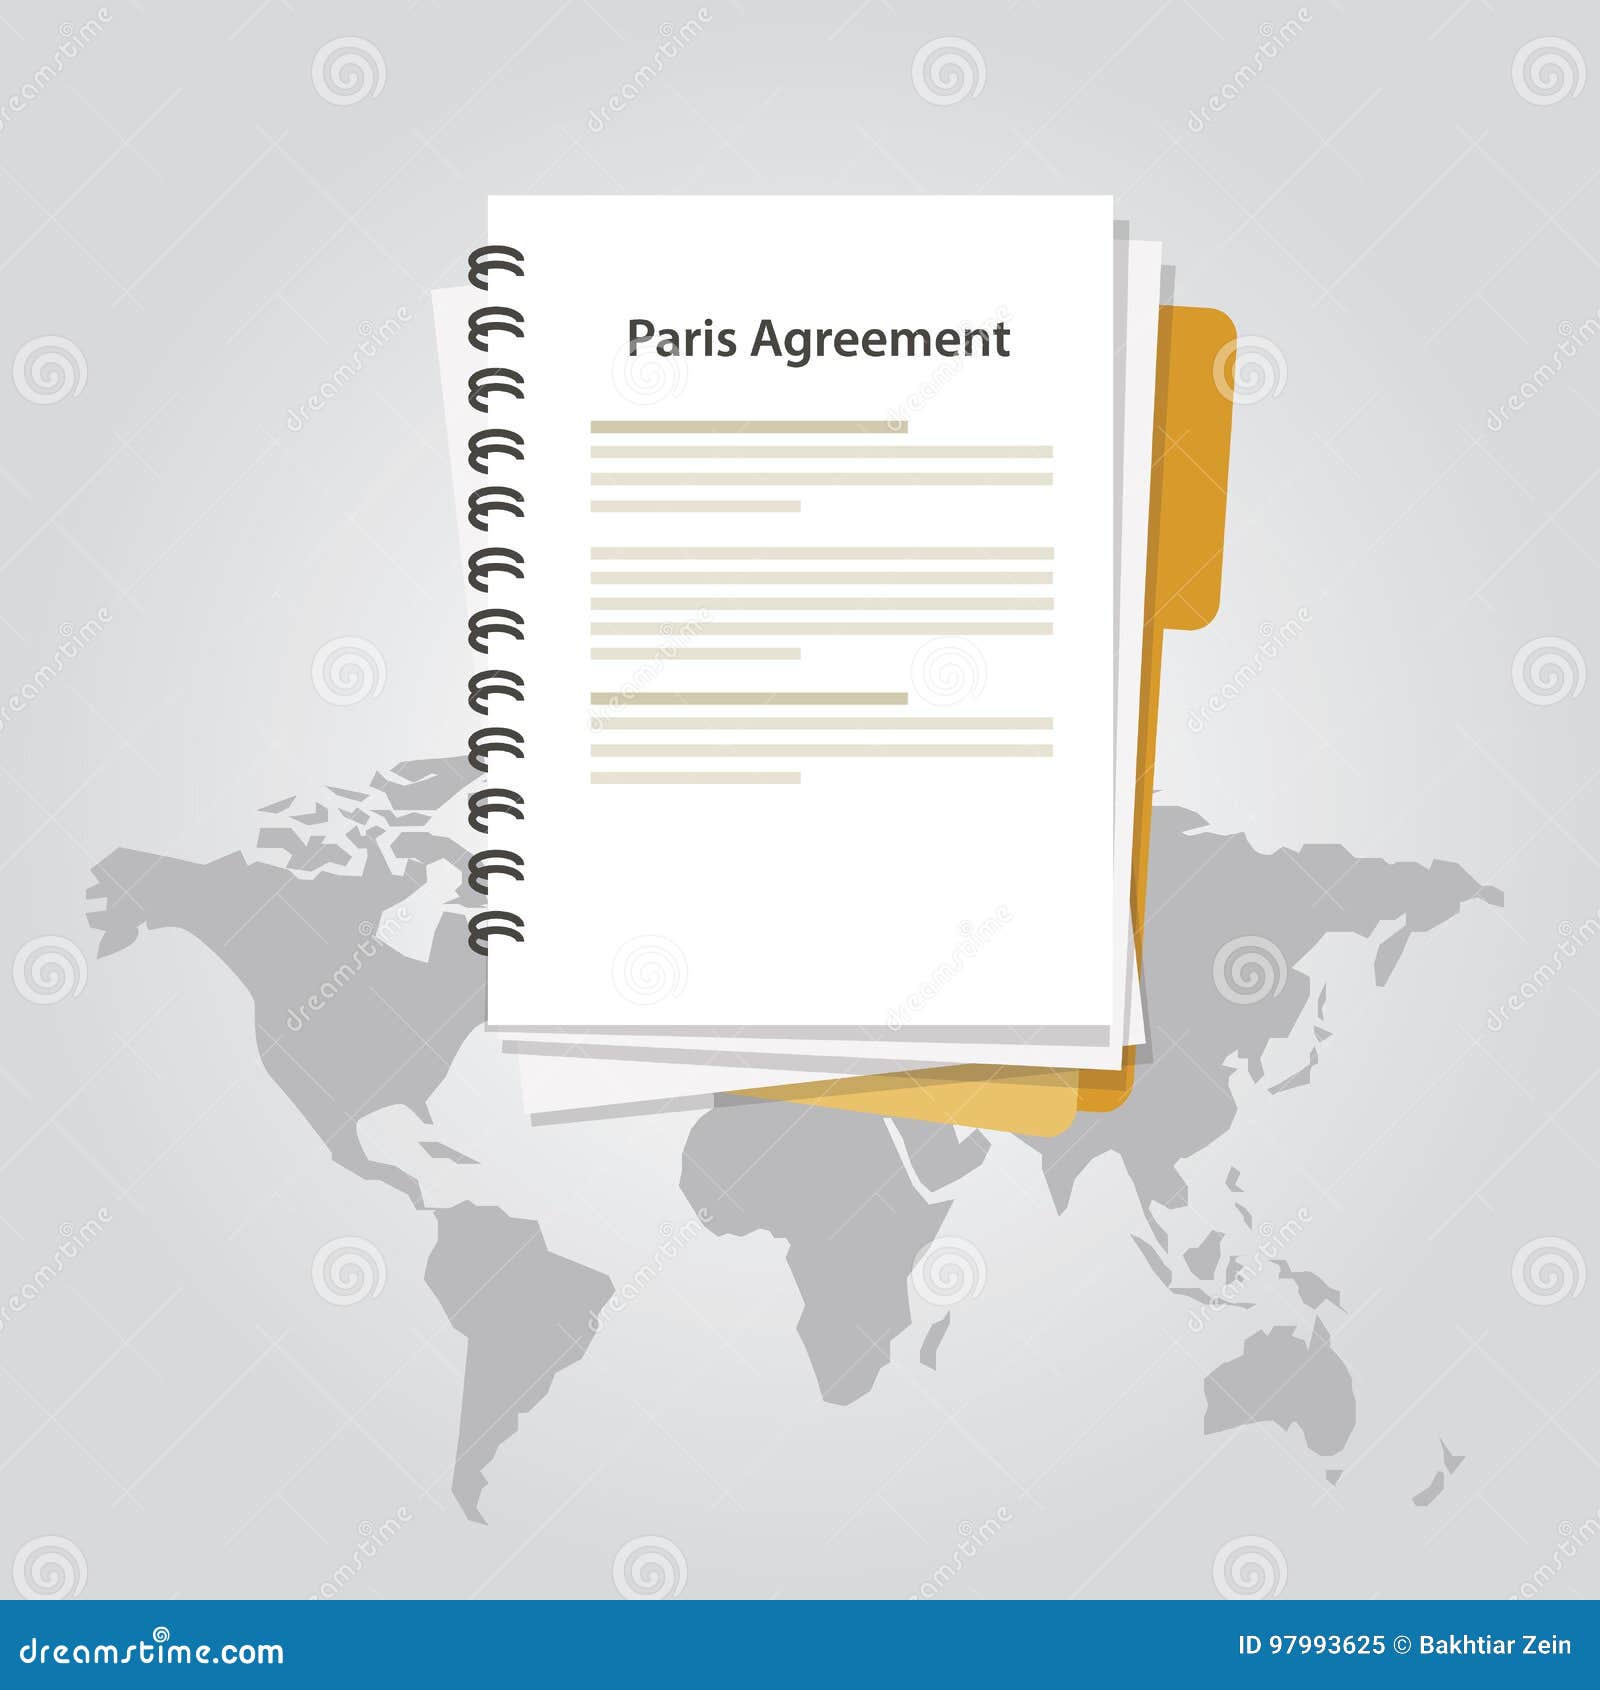 paris agreement climate accord paper document international